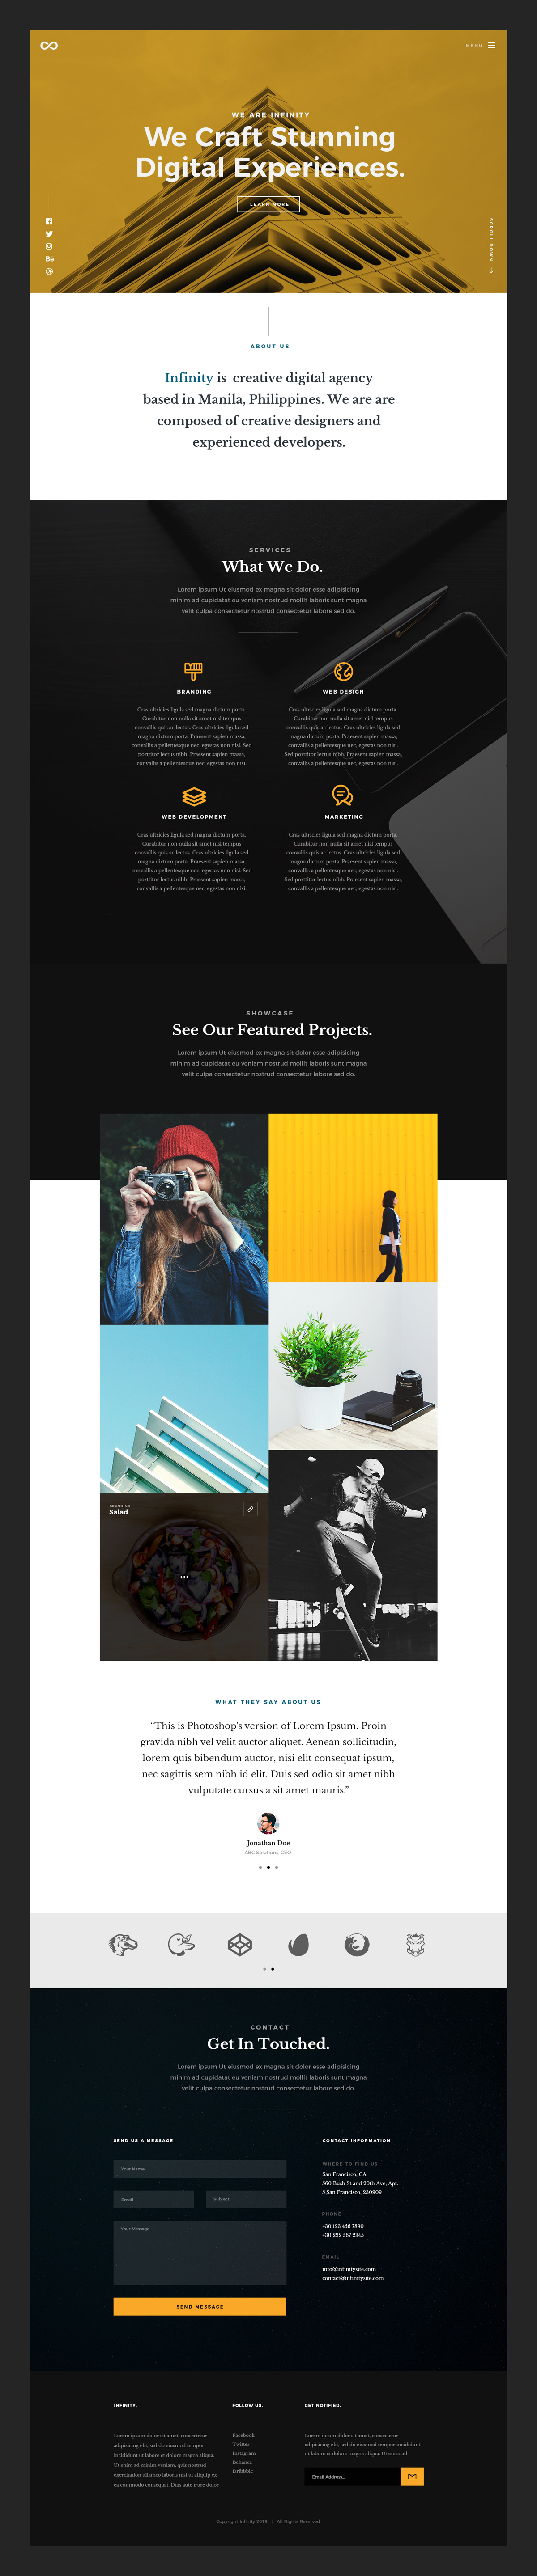 Infinity - Agency Portfolio Free PSD Website Template 02